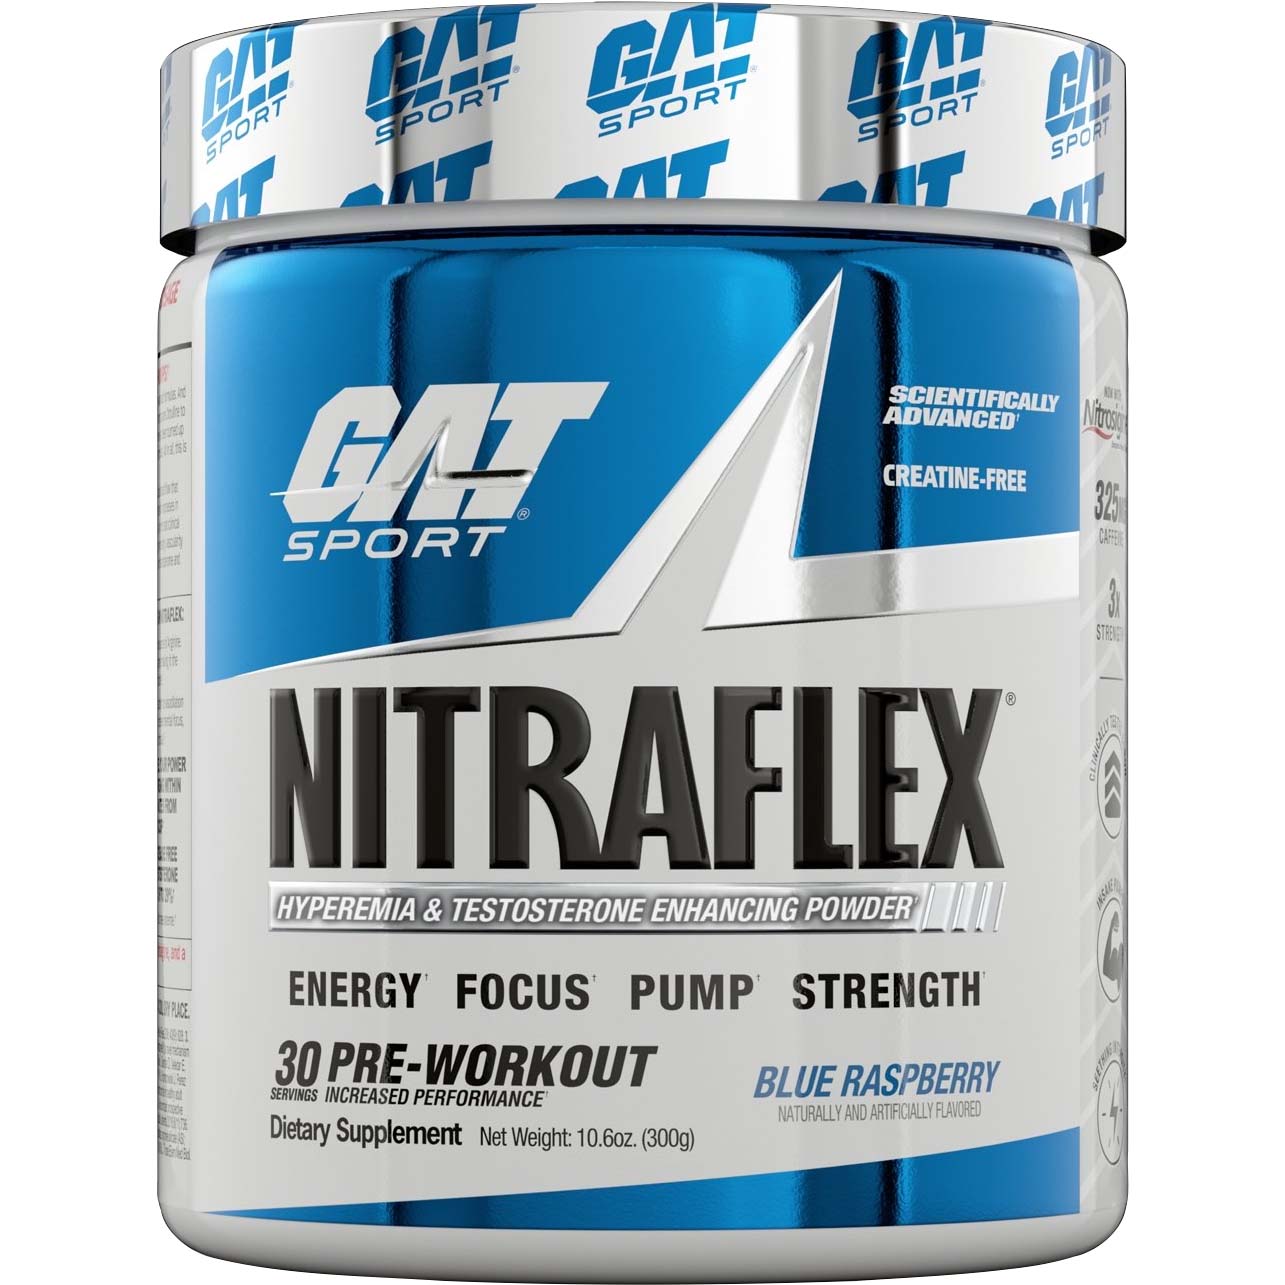 Gat Sport Nitraflex Testosterone Boosting Powder 30 Blue Raspberry